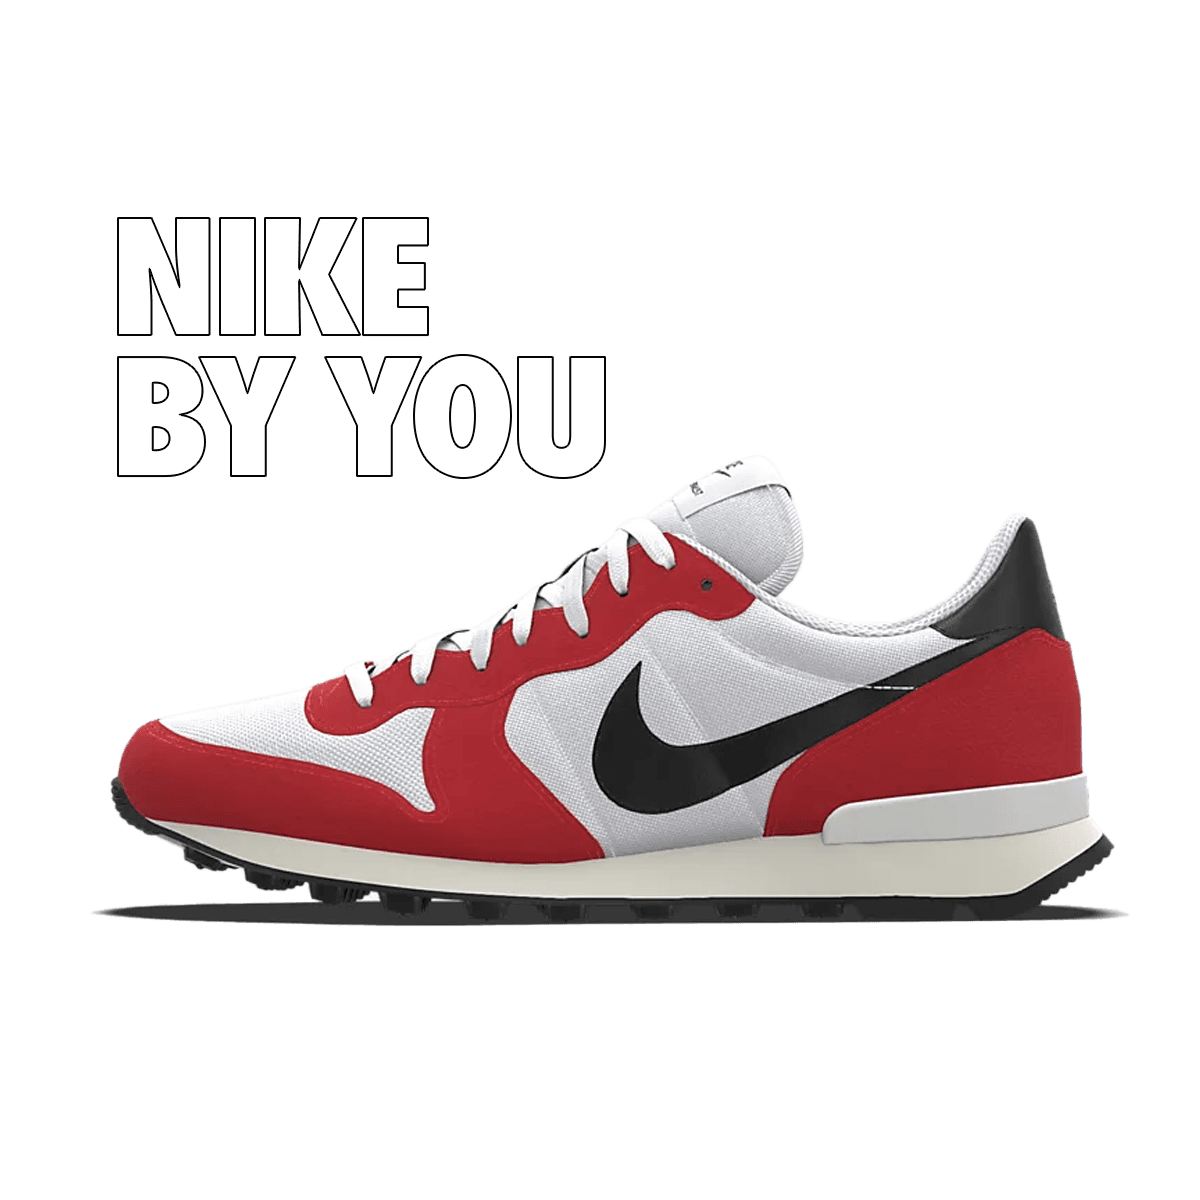 Nike Internationalist - By You